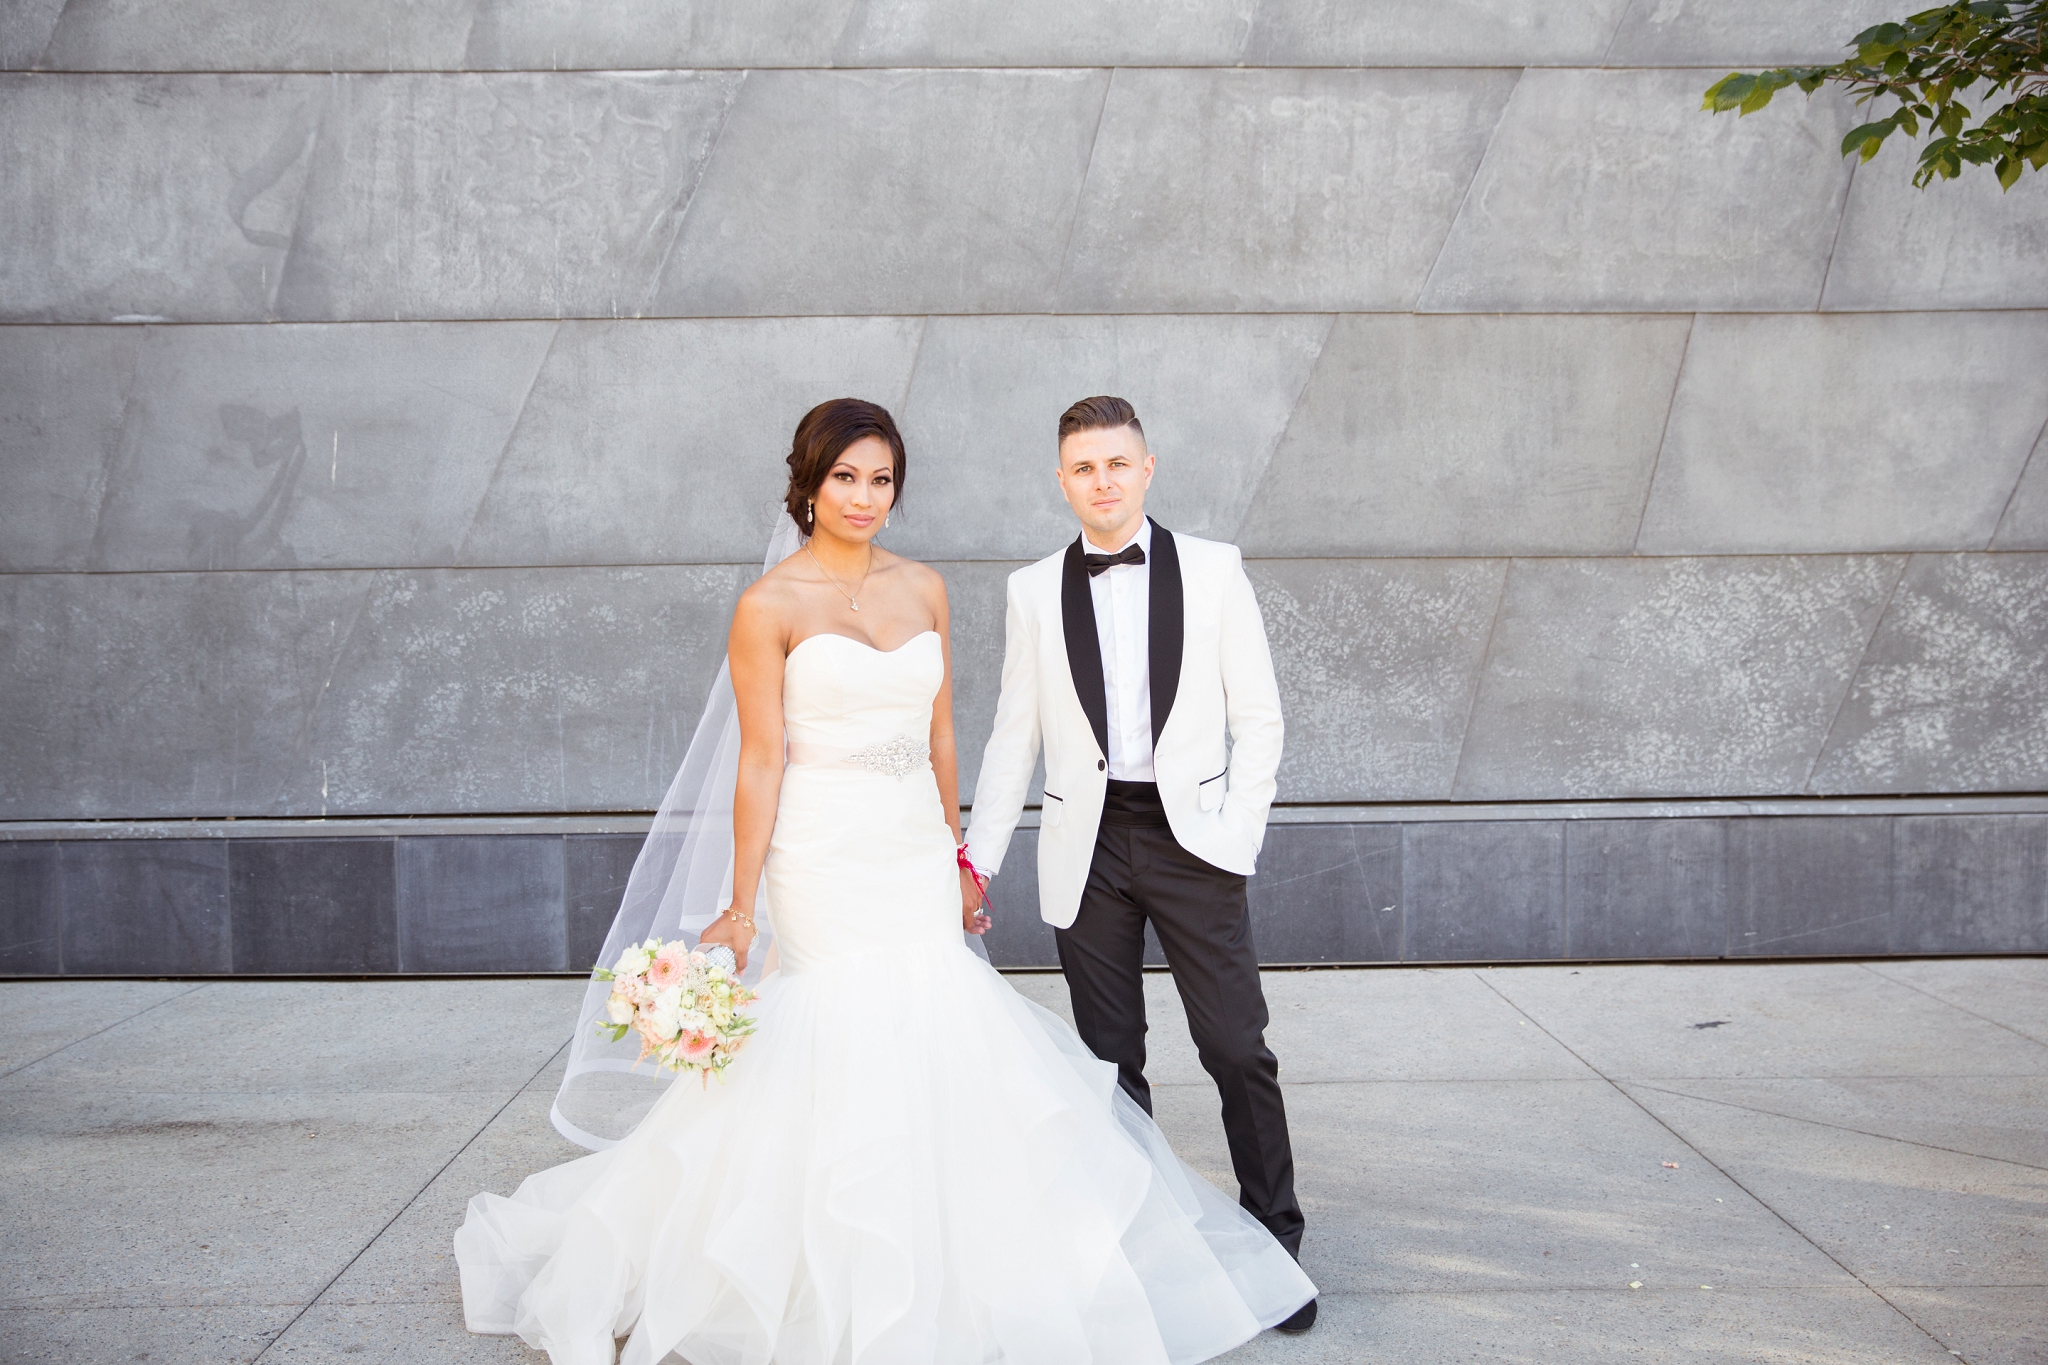 bride and groom hayley paige wedding dress edmonton art gallery